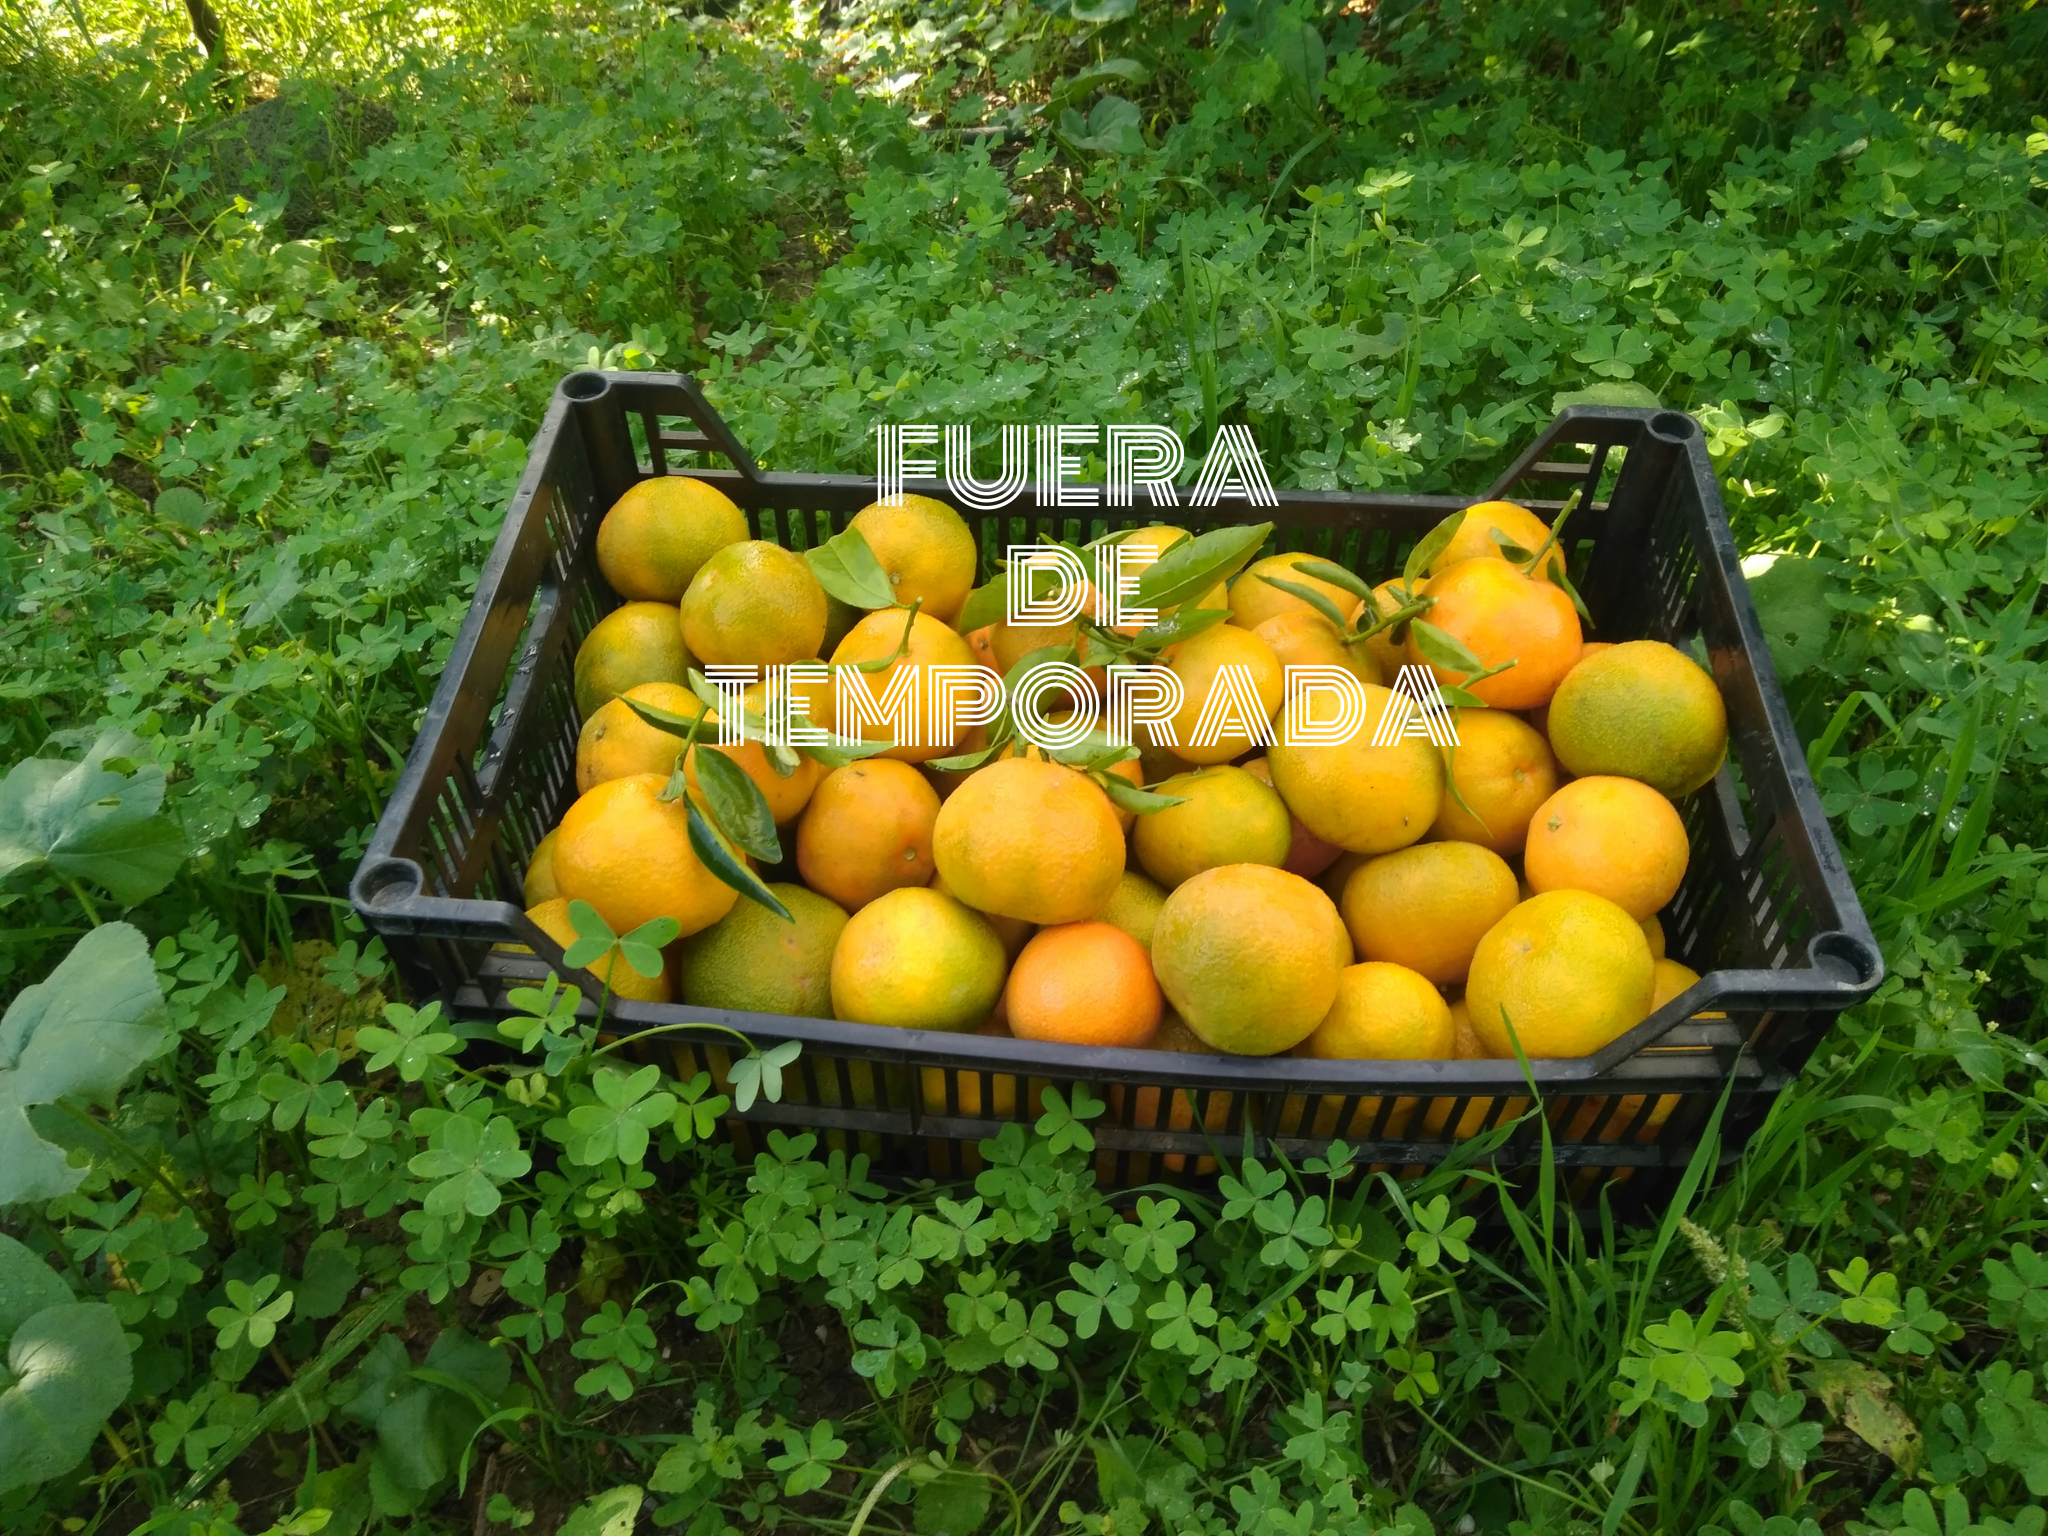 Mixed box of oranges and mandarins 10kg